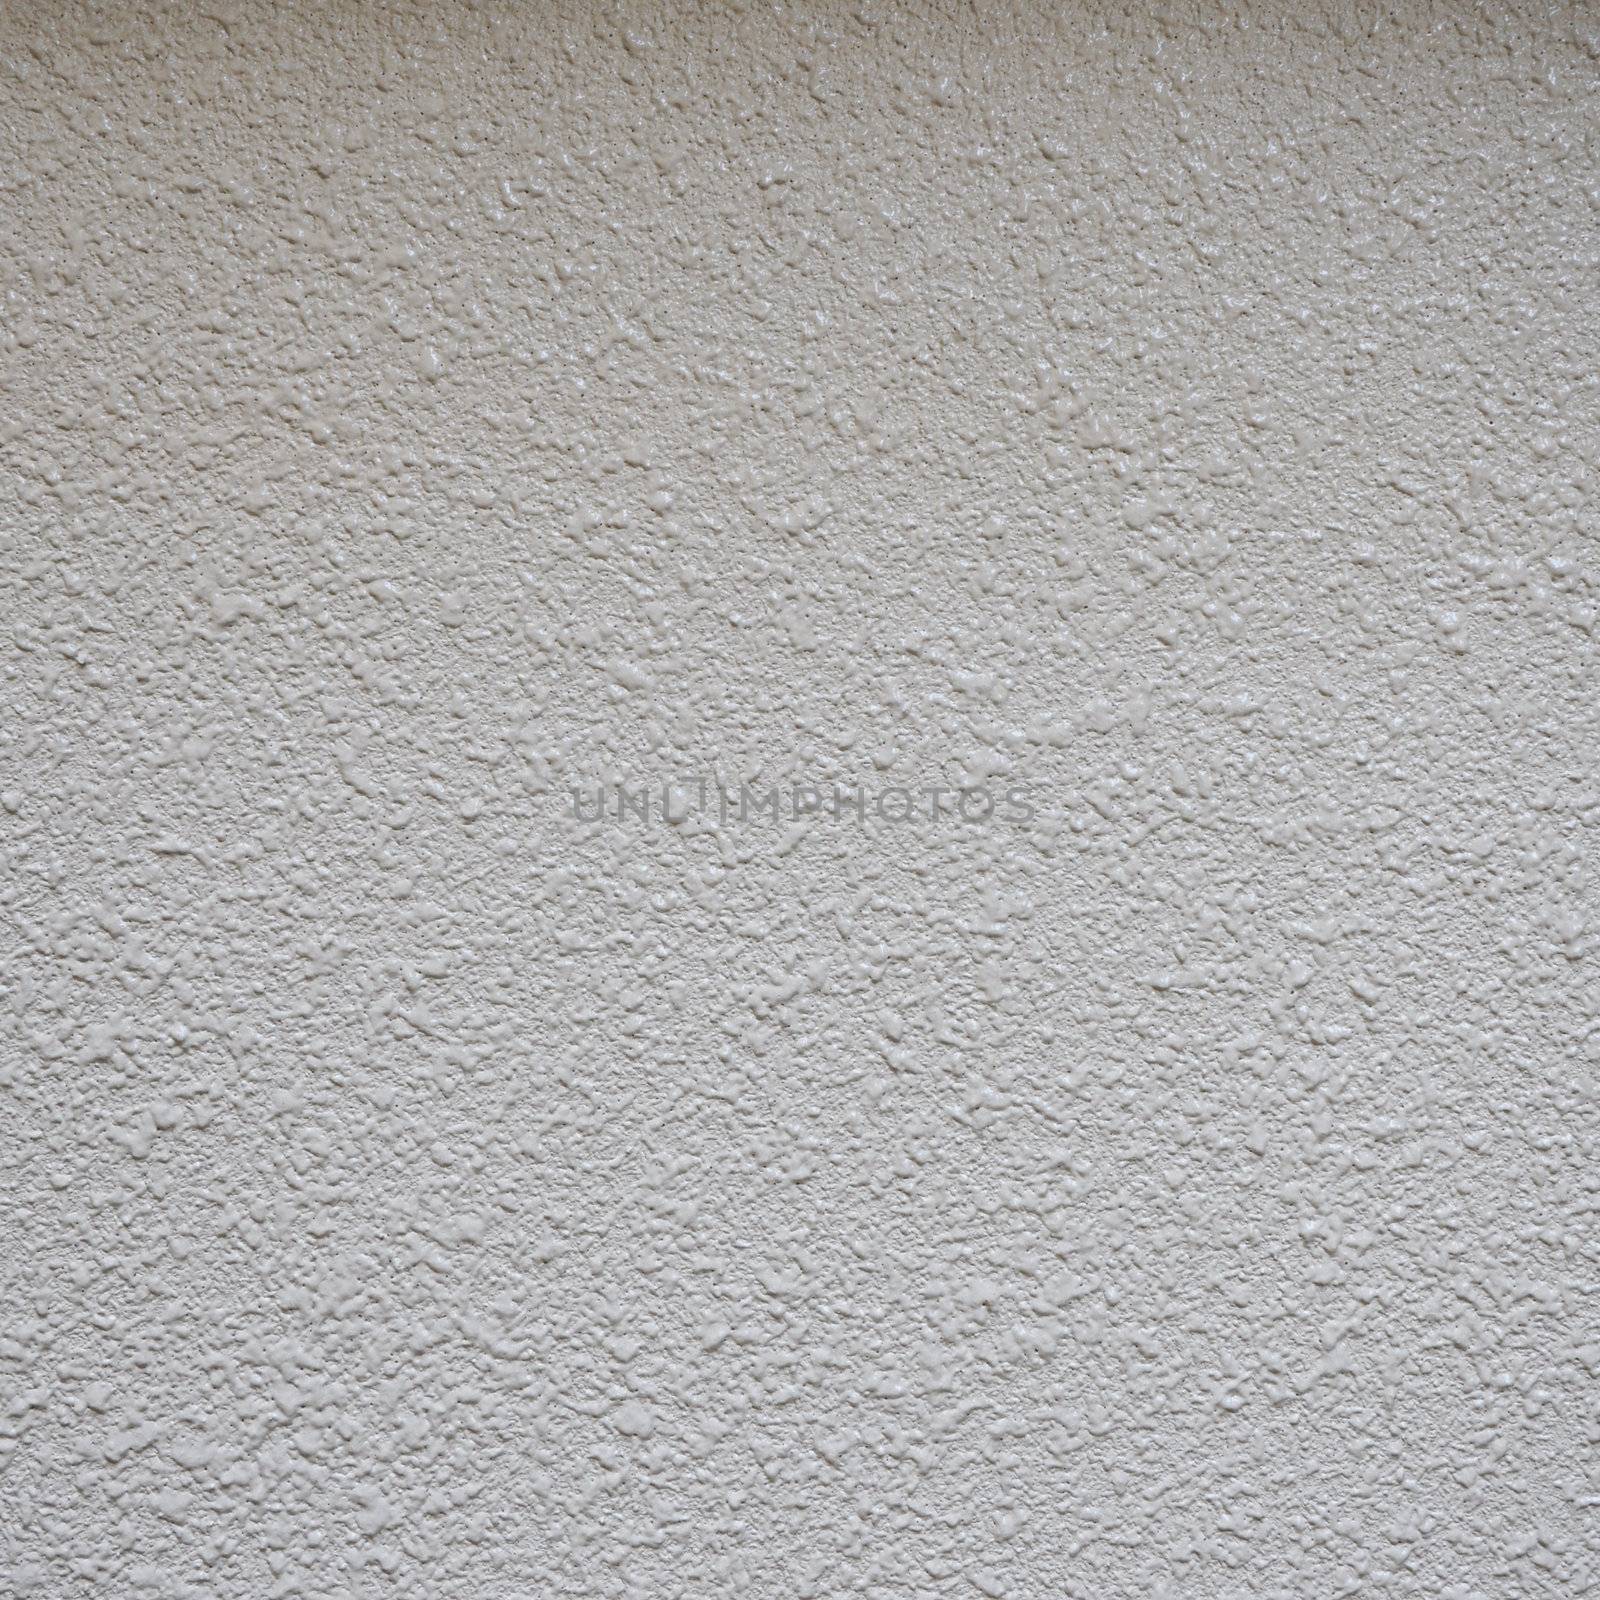 White wall stucco  by siraanamwong